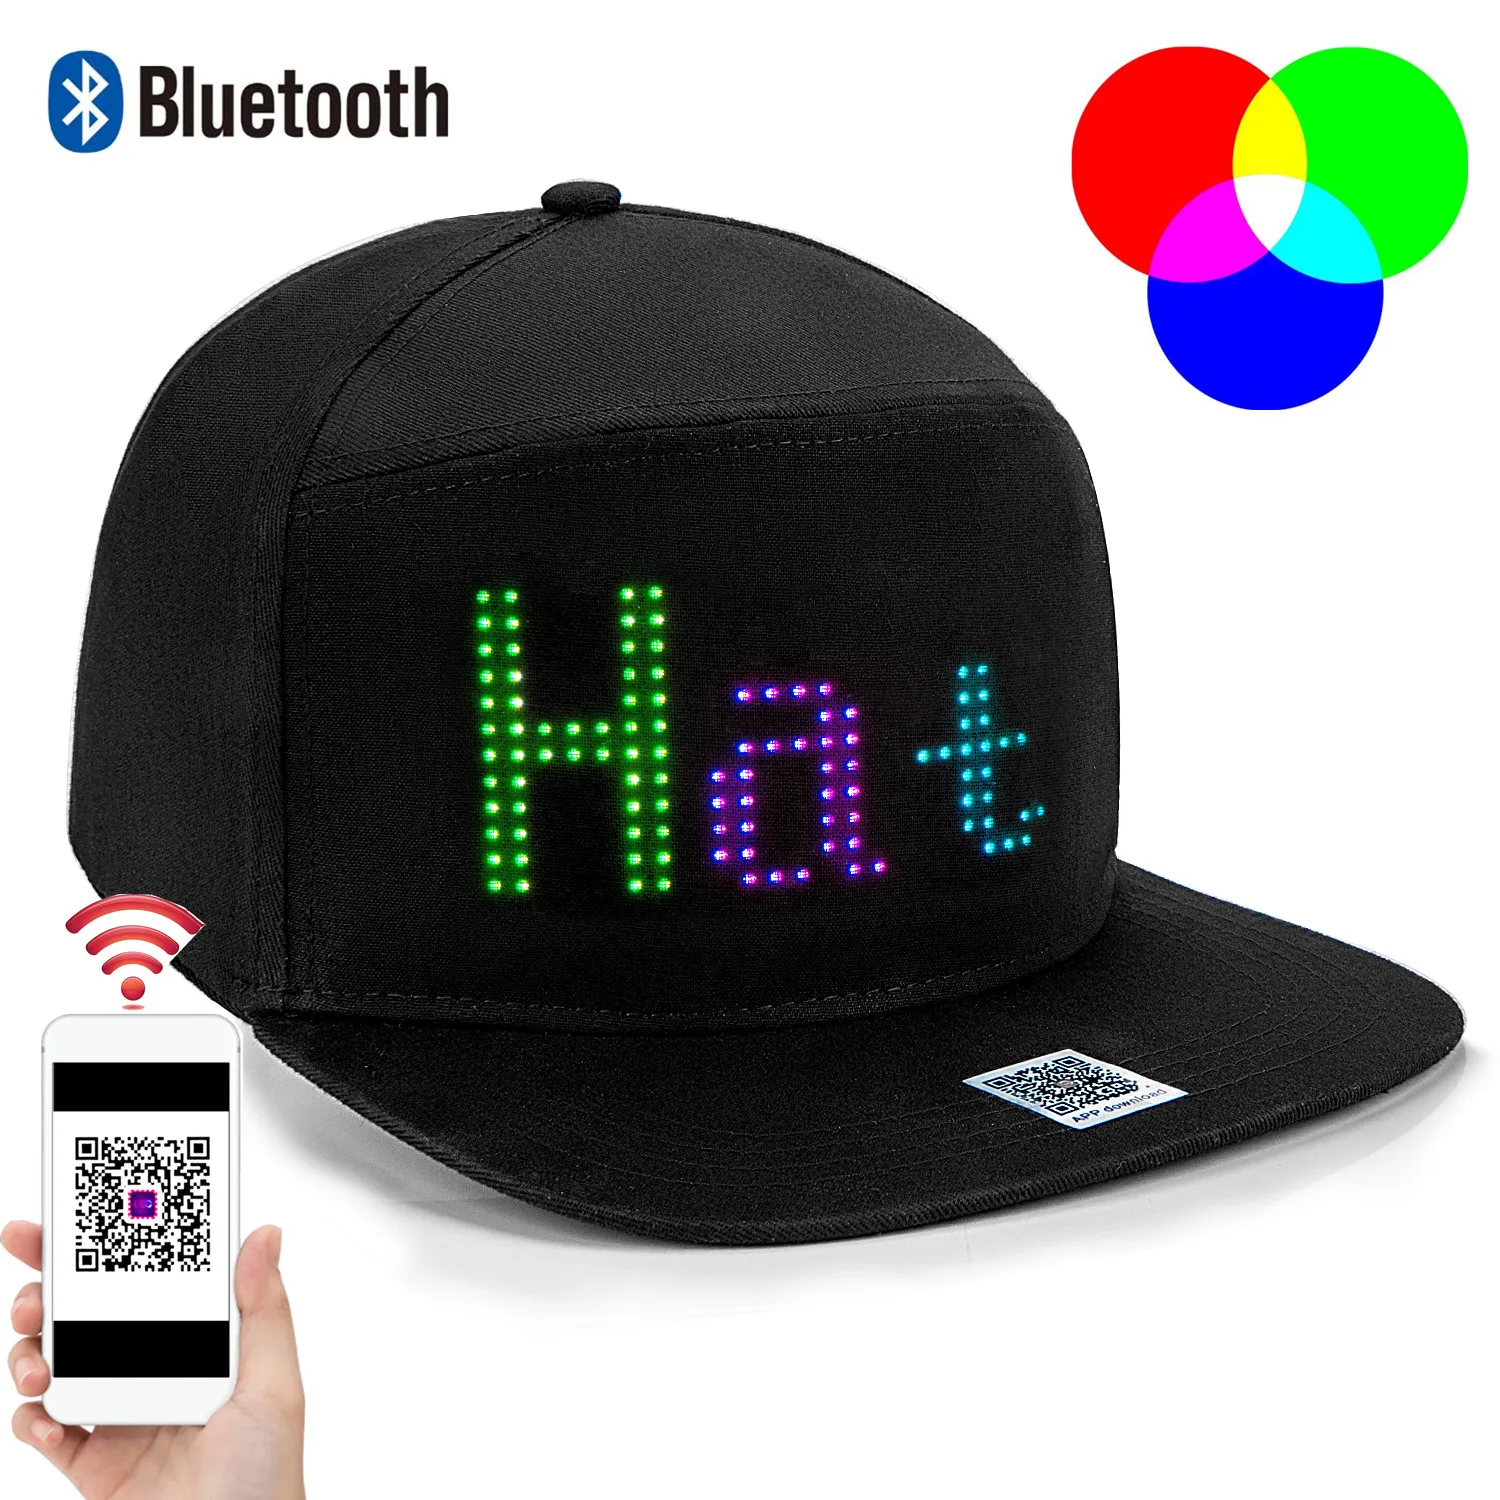 Mode Cap LED Cool Hat Bildschirm Licht Wasserdichtes Smartphone Cesteuert Ctrl 